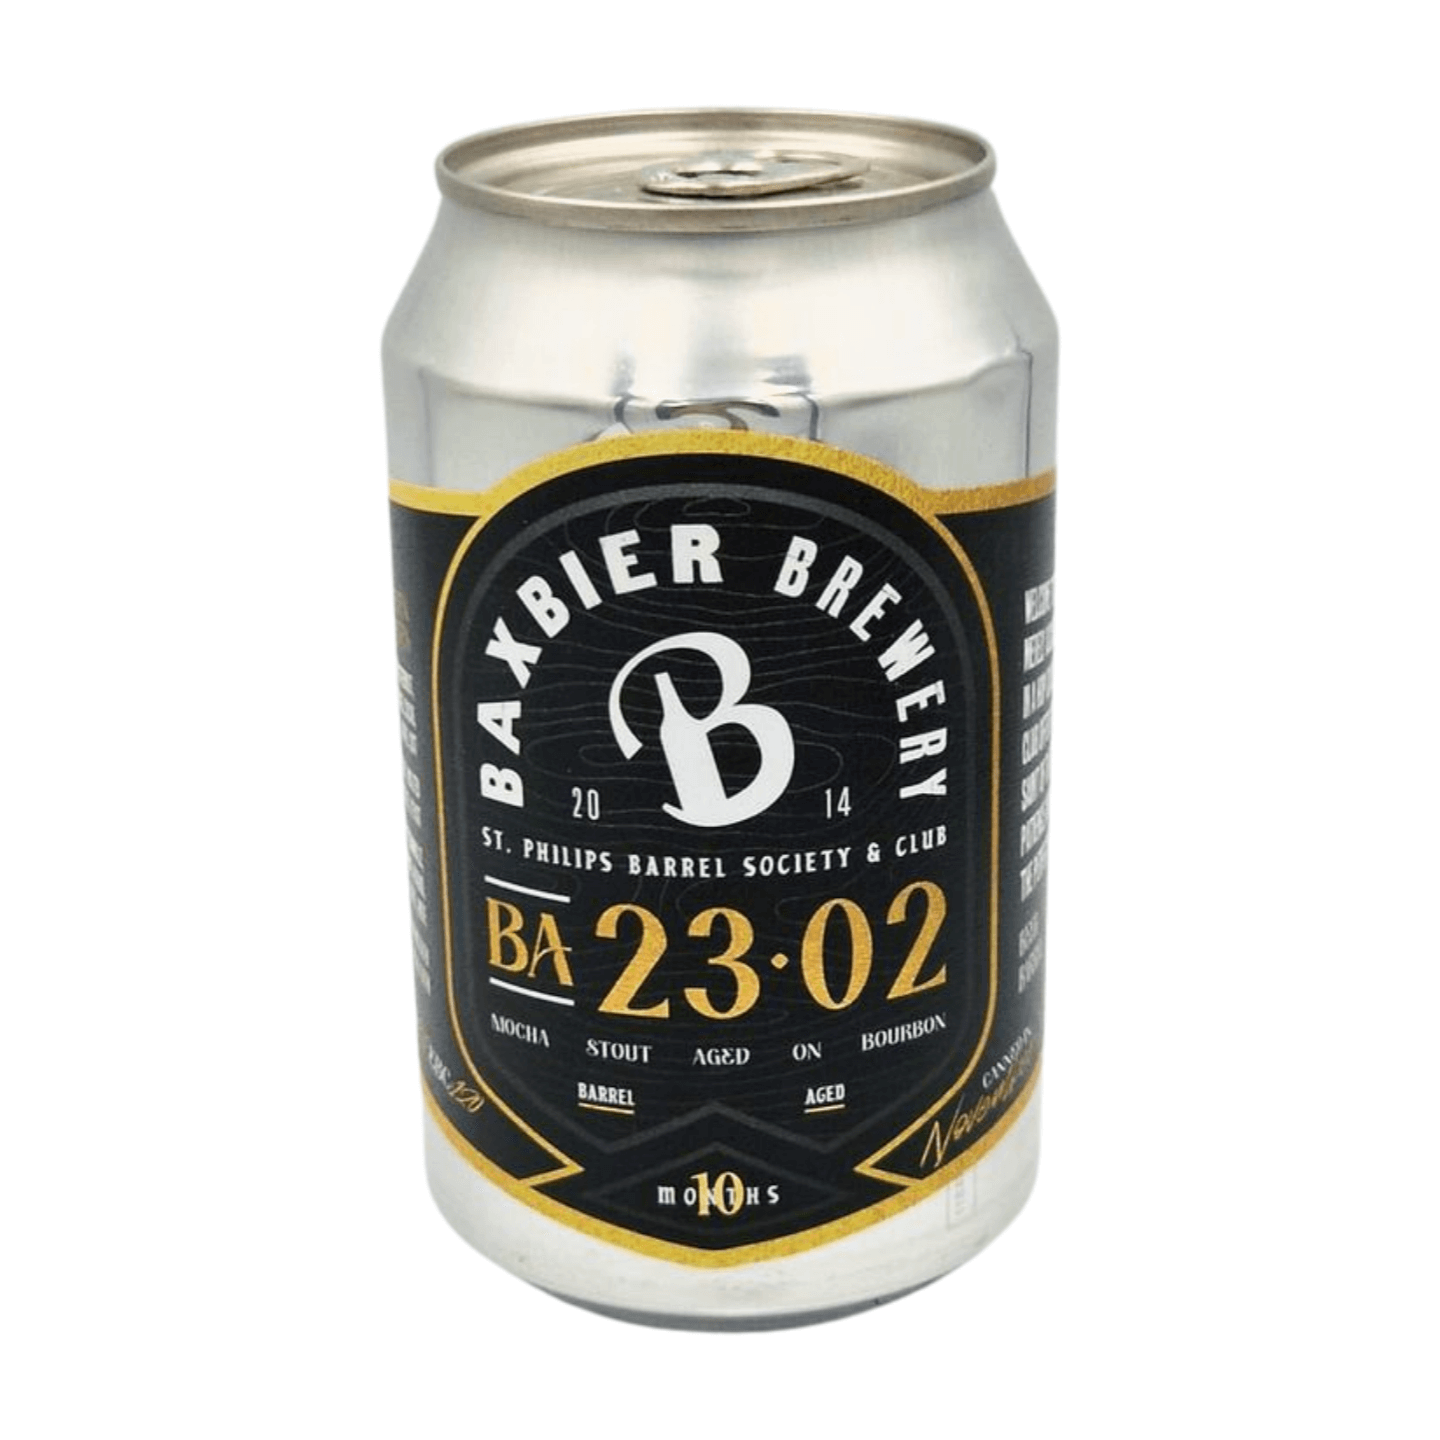 Baxbier BA 23.02 | Bourbon BA Mocha Stout Webshop Online Verdins Bierwinkel Rotterdam